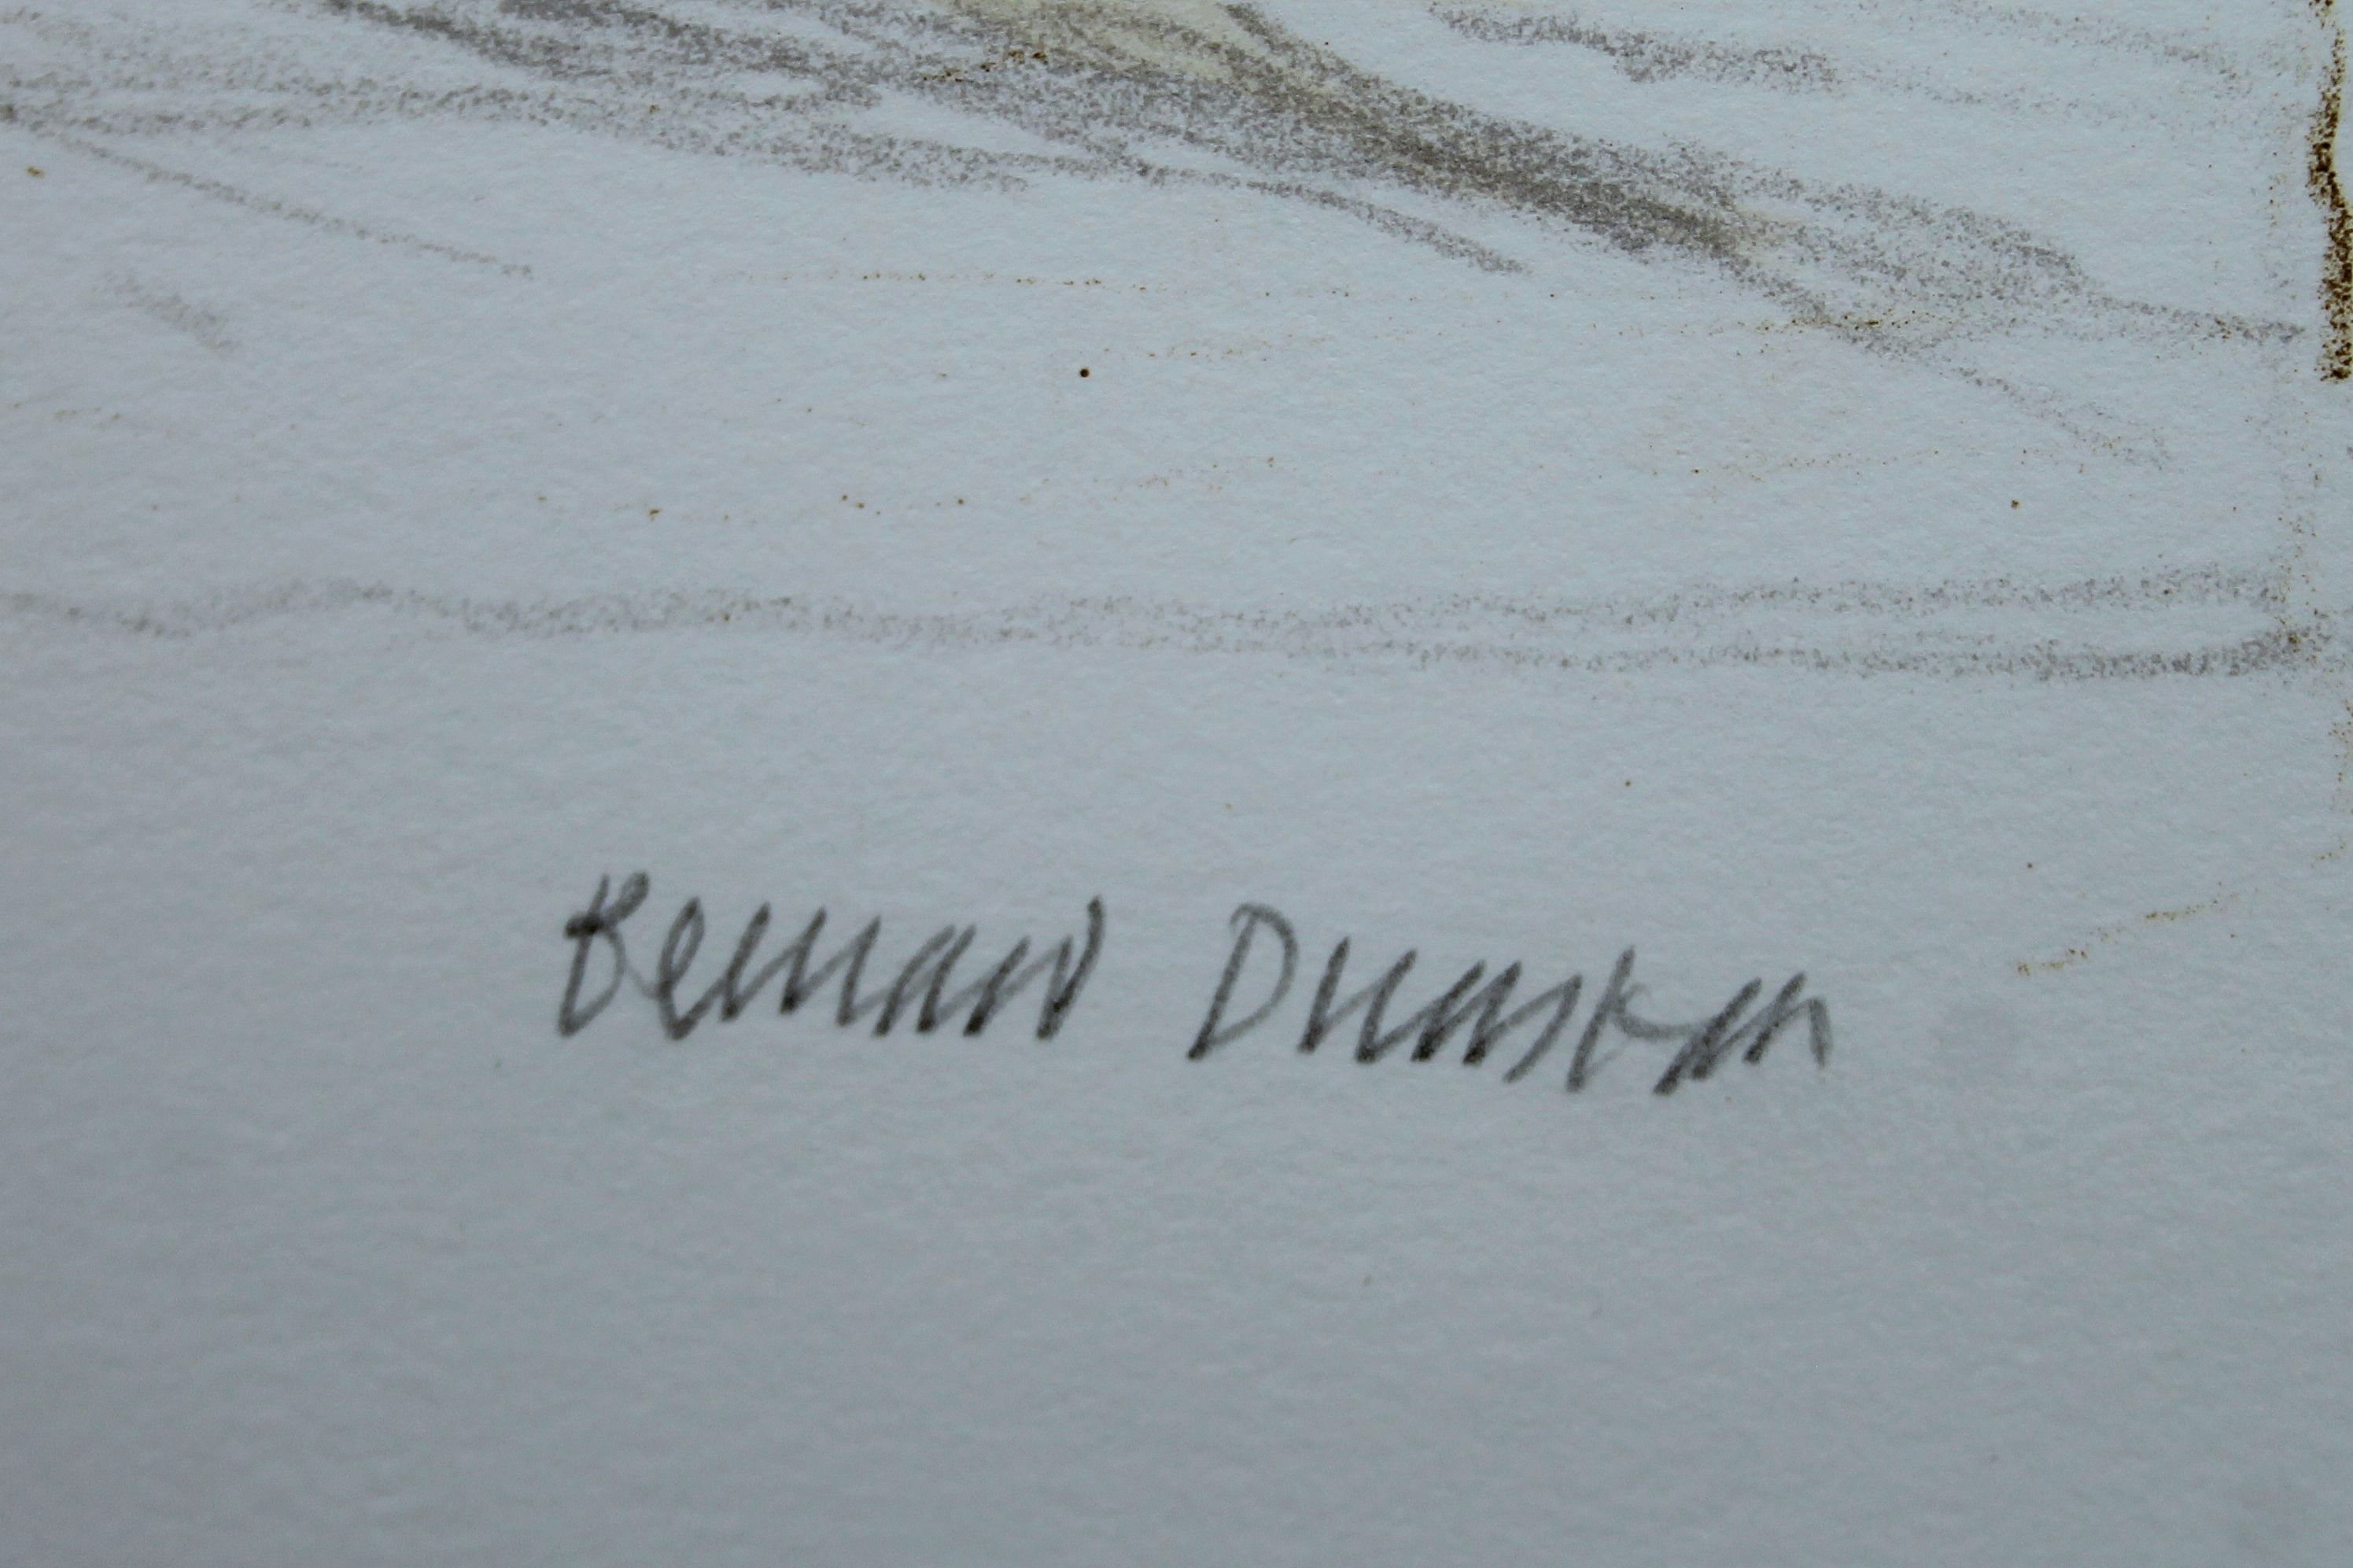 BERNARD DUNSTAN RA (1920-1917) British (AR), Dressing, a limited edition lithographic print, - Image 2 of 2